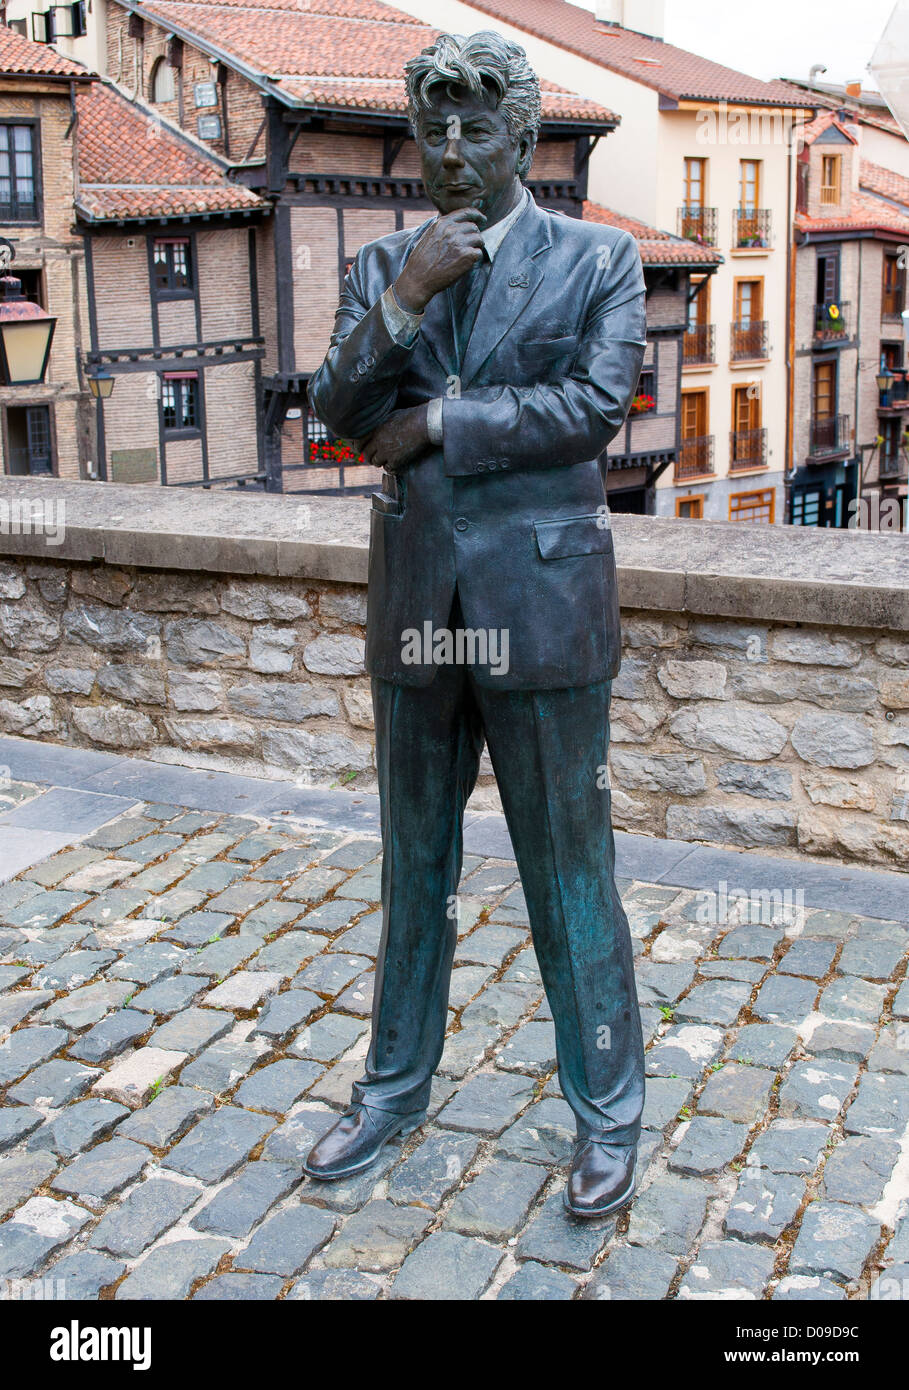 Statue of the British thriller writer Ken Follett, which stands next to the Santa Maria cathedral in Vitoria-Gasteiz, Spain Stock Photo